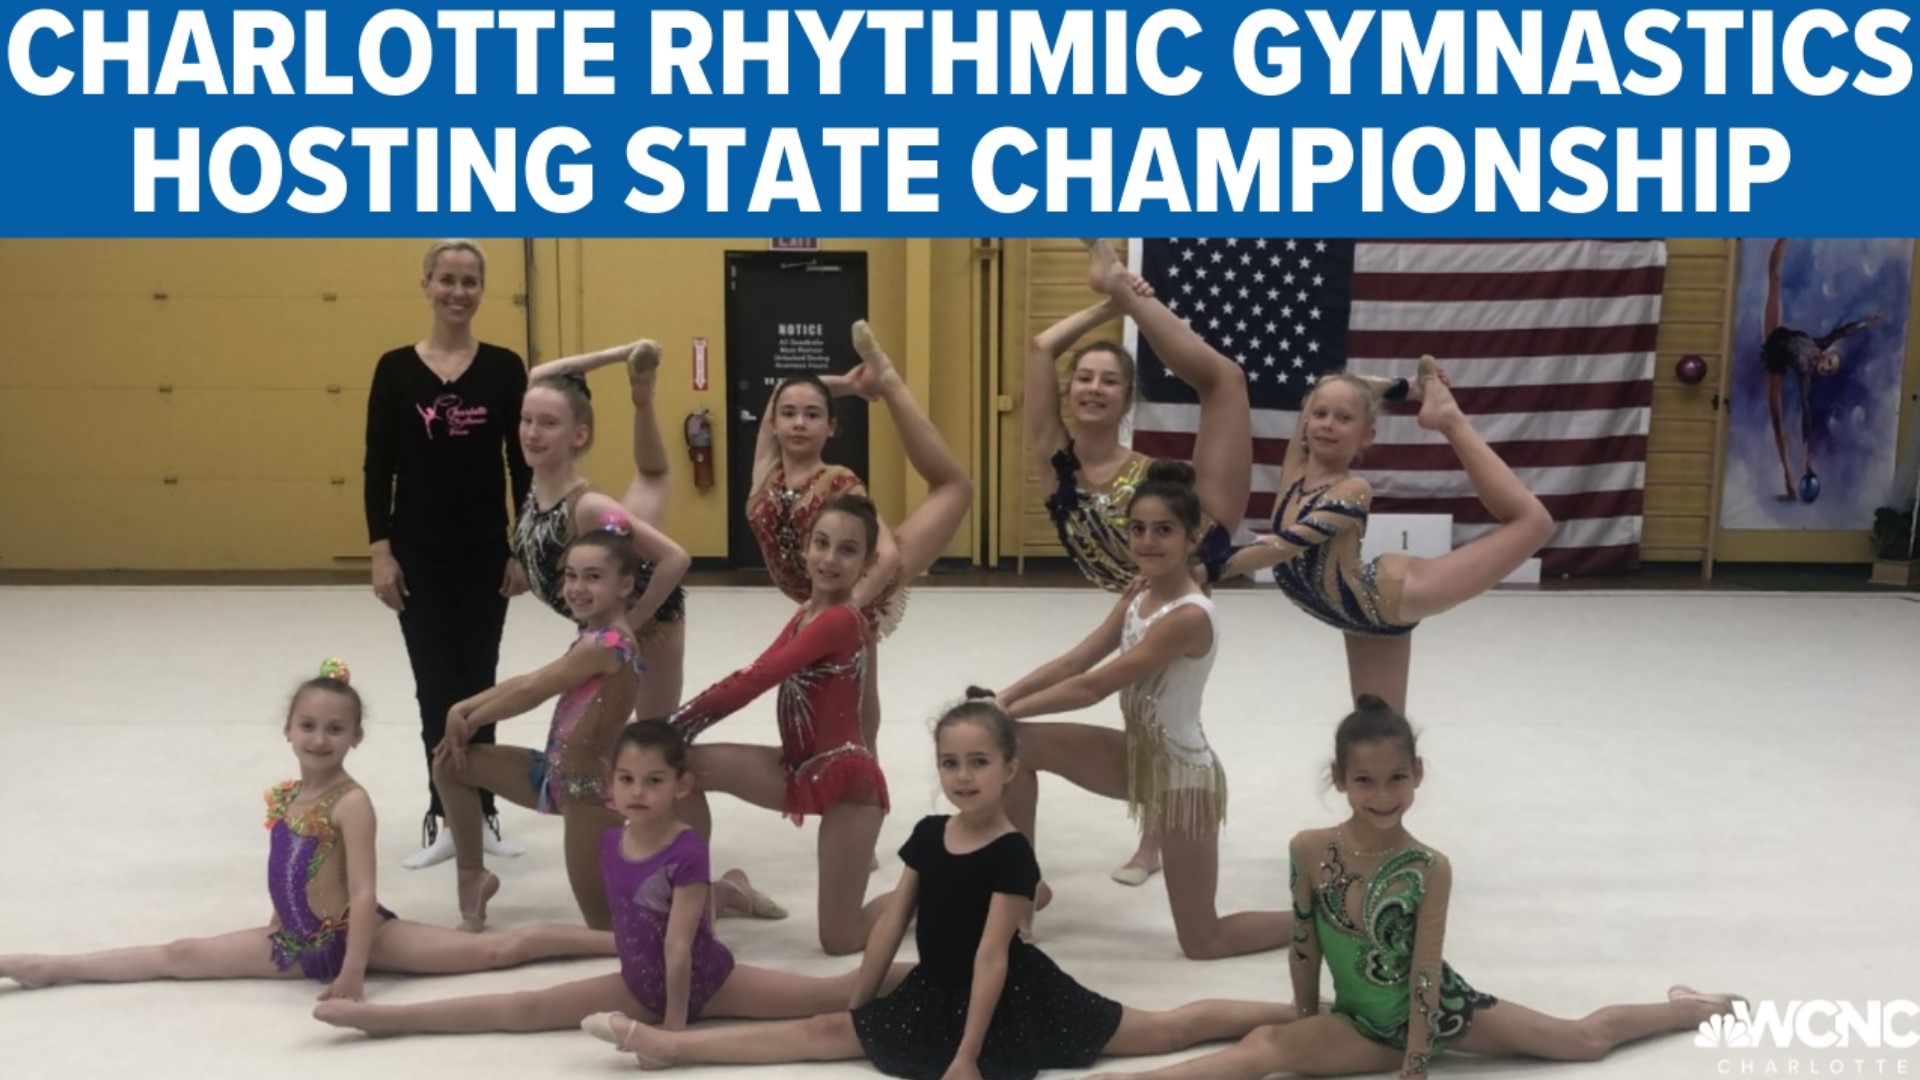 Charlotte Rhythmic Gymnastics will host the state's first North Carolina State Rhythmic Gymnastics Championship accredited by USA Gymnastics.